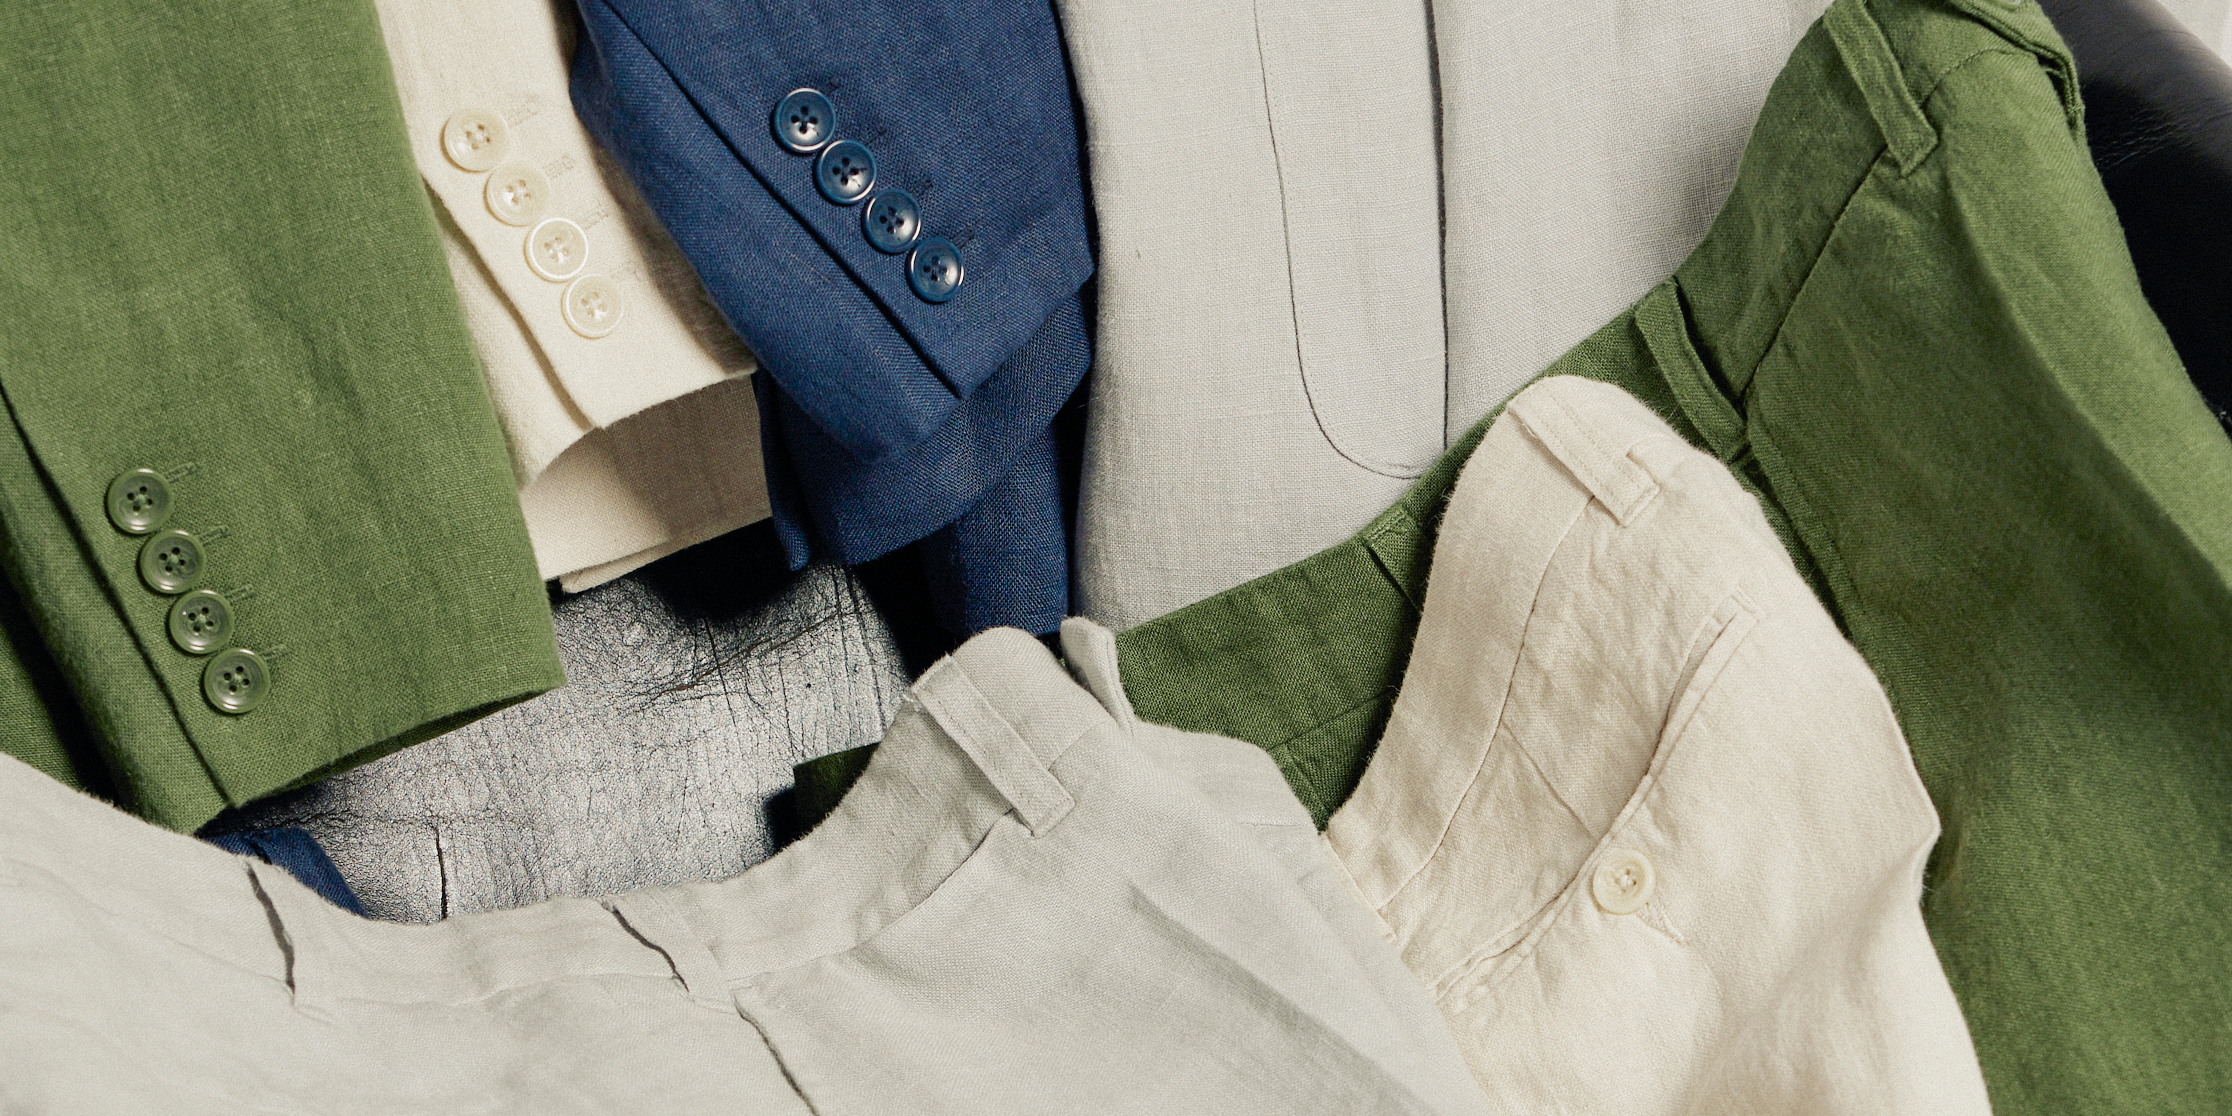 Slim Fit Linen suit trousers - Grey-green - Men | H&M IN